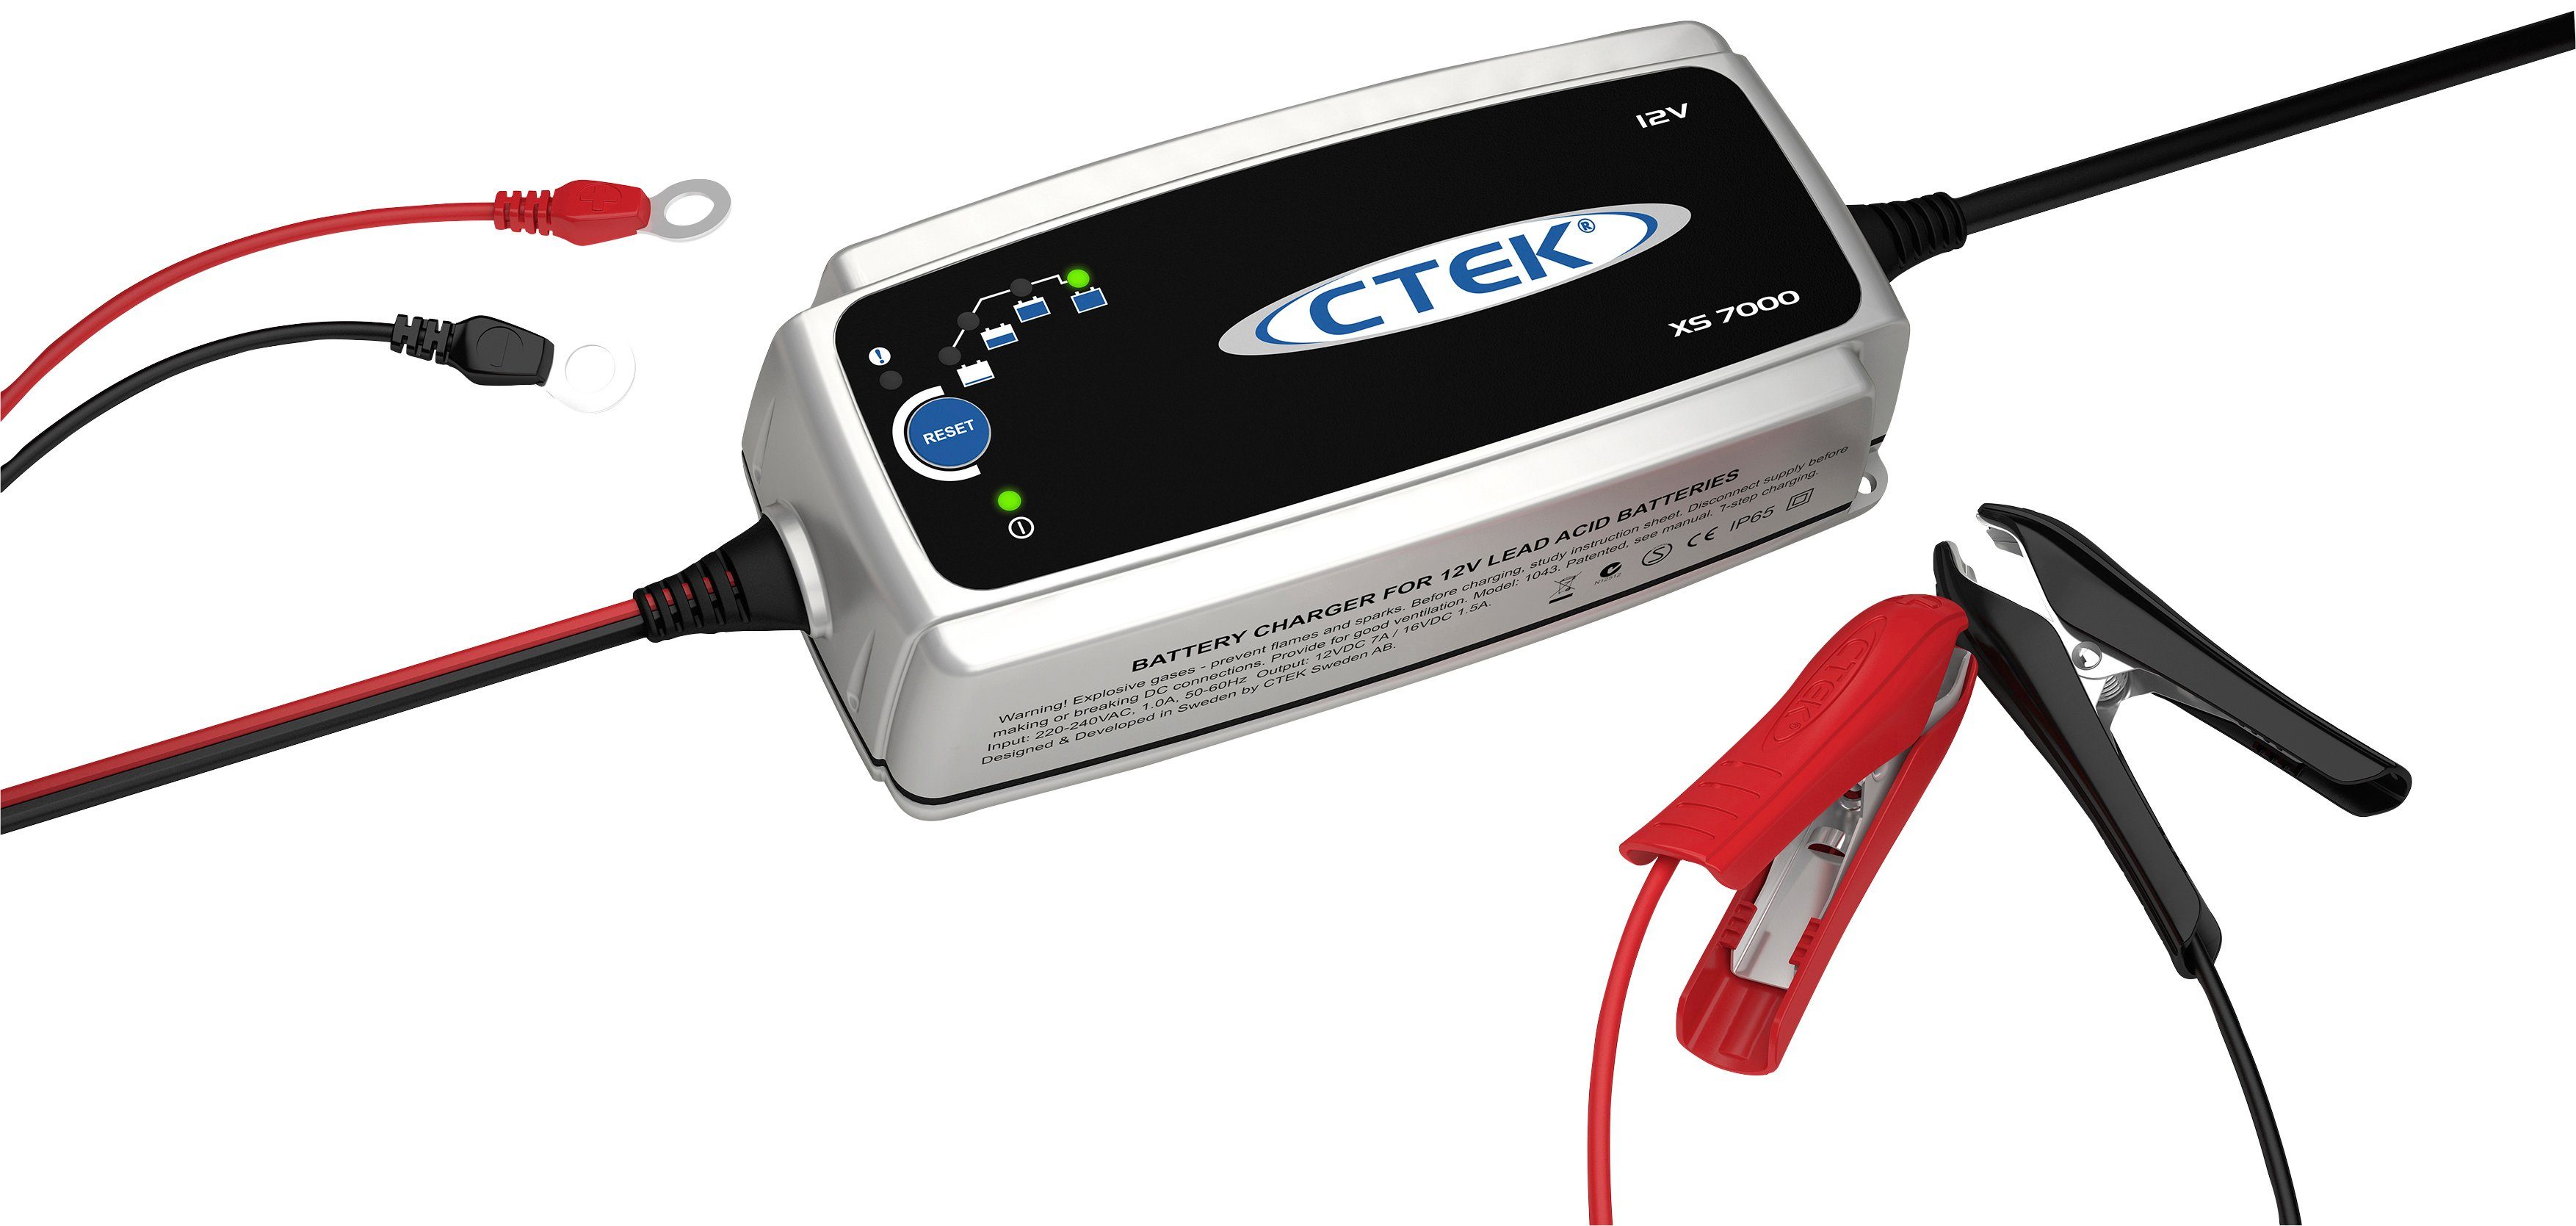 CTEK »XS7000« Batterie-Ladegerät (Patentierte Entsulfatierungsfunktion)